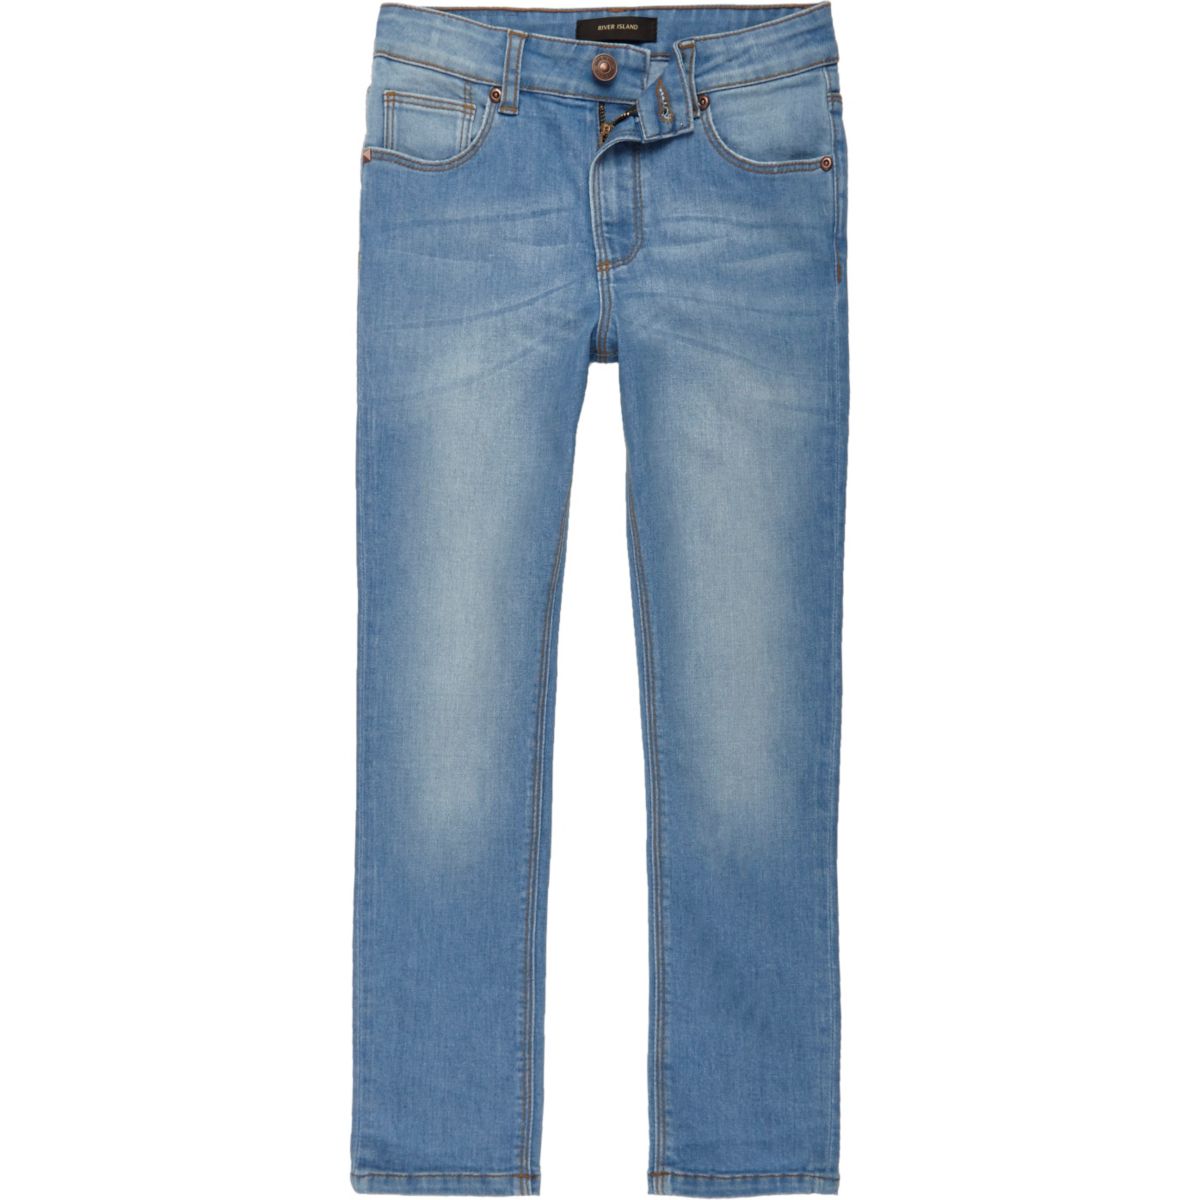 Boys light blue Sid skinny jeans - Seasonal Offers - Sale - boys